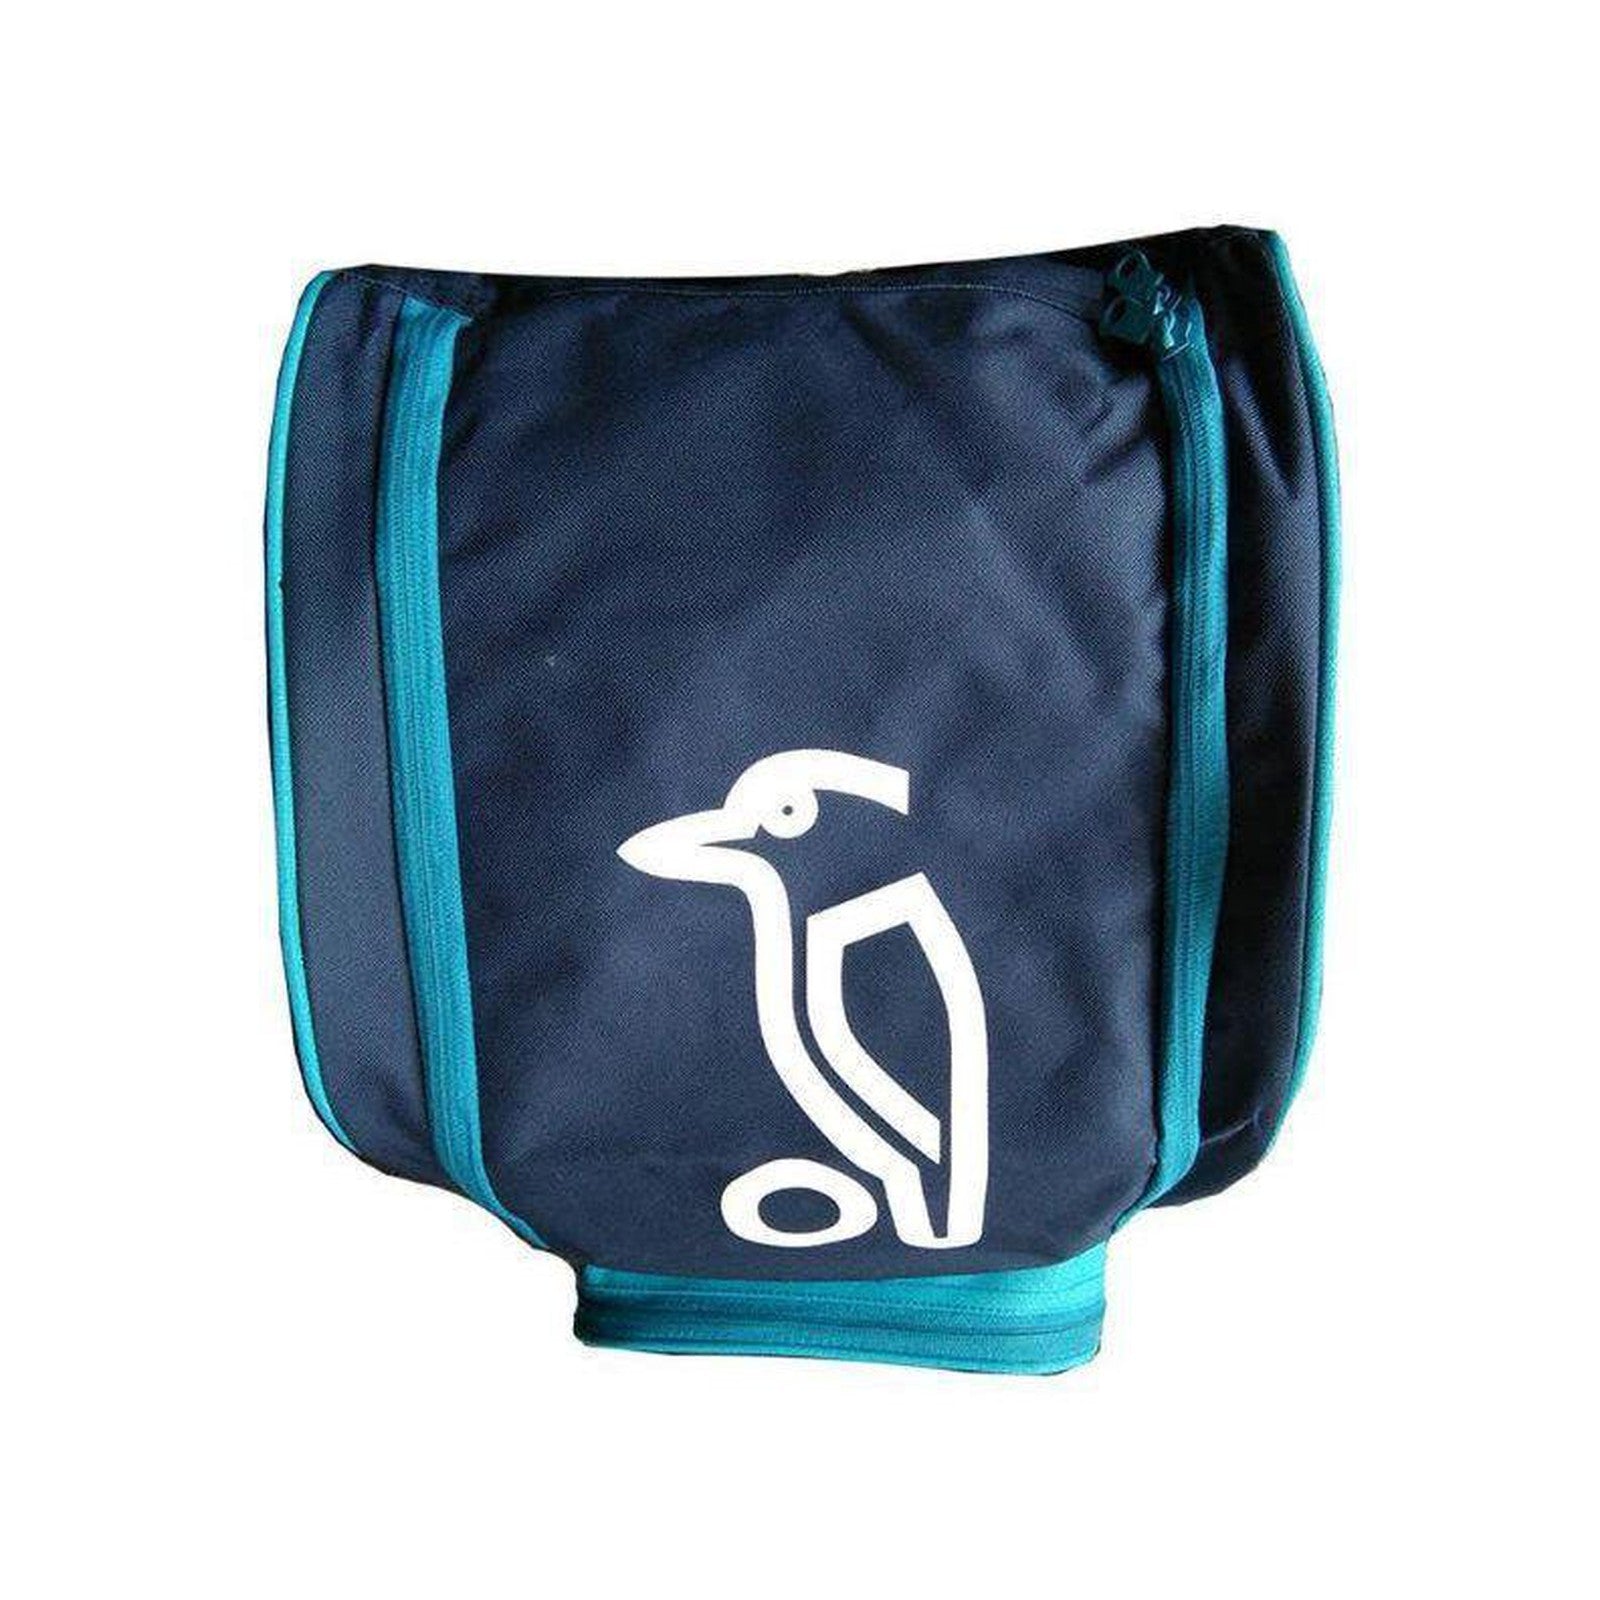 Kookaburra Pro Duffle Kit Bag